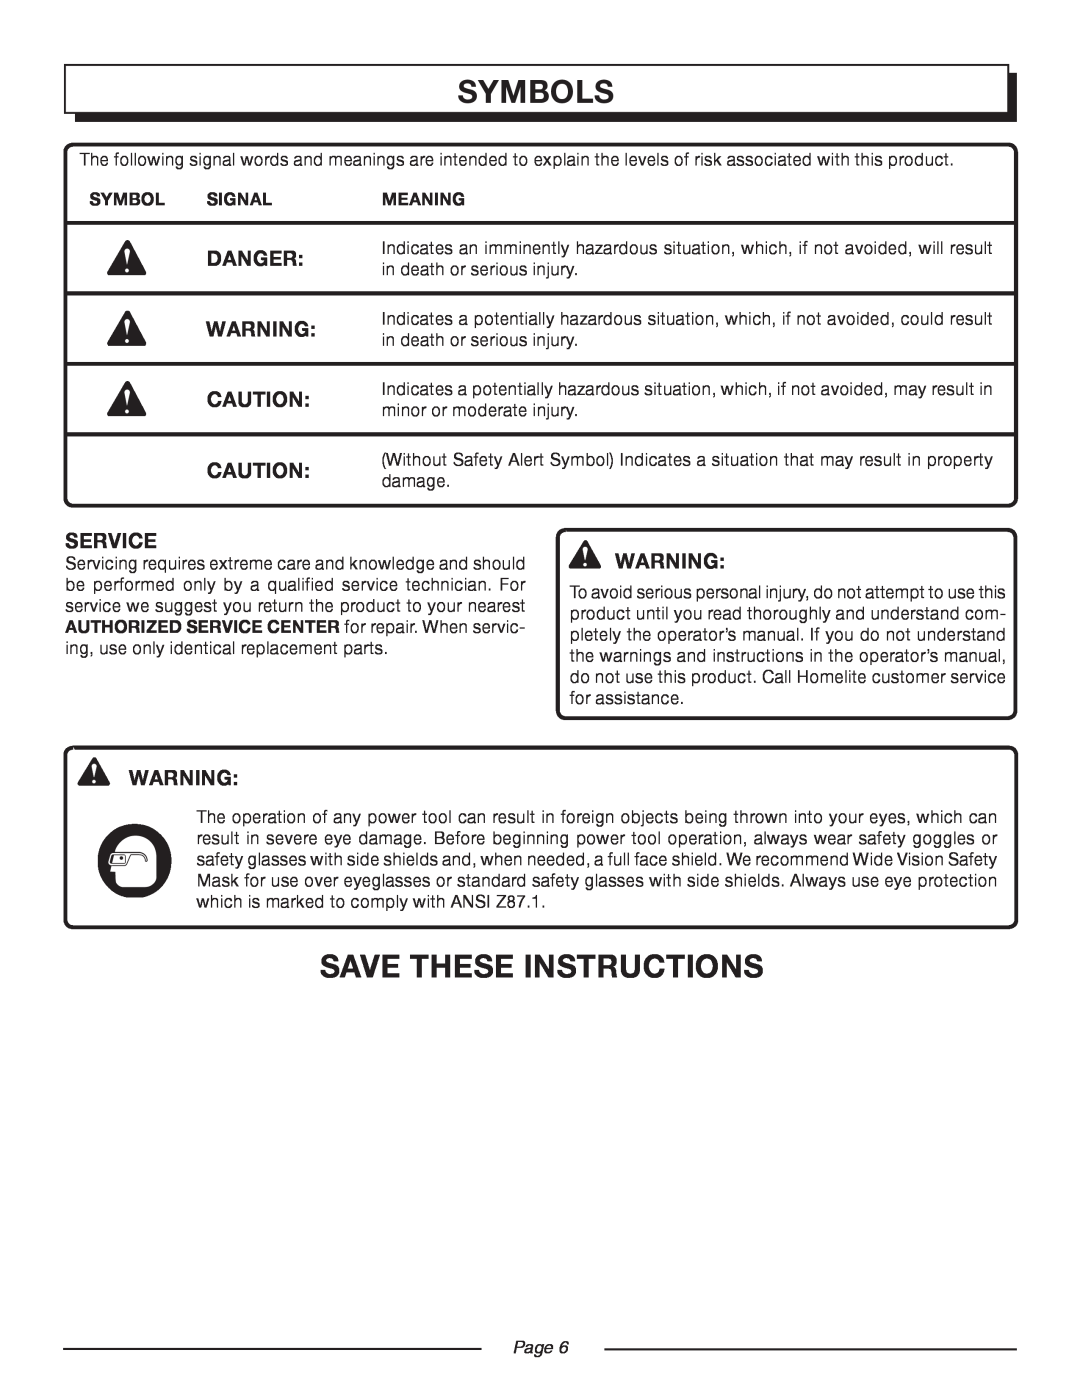 Homelite UT50500, UT50901 manual Save These Instructions, Danger, Service, Symbols, Page  